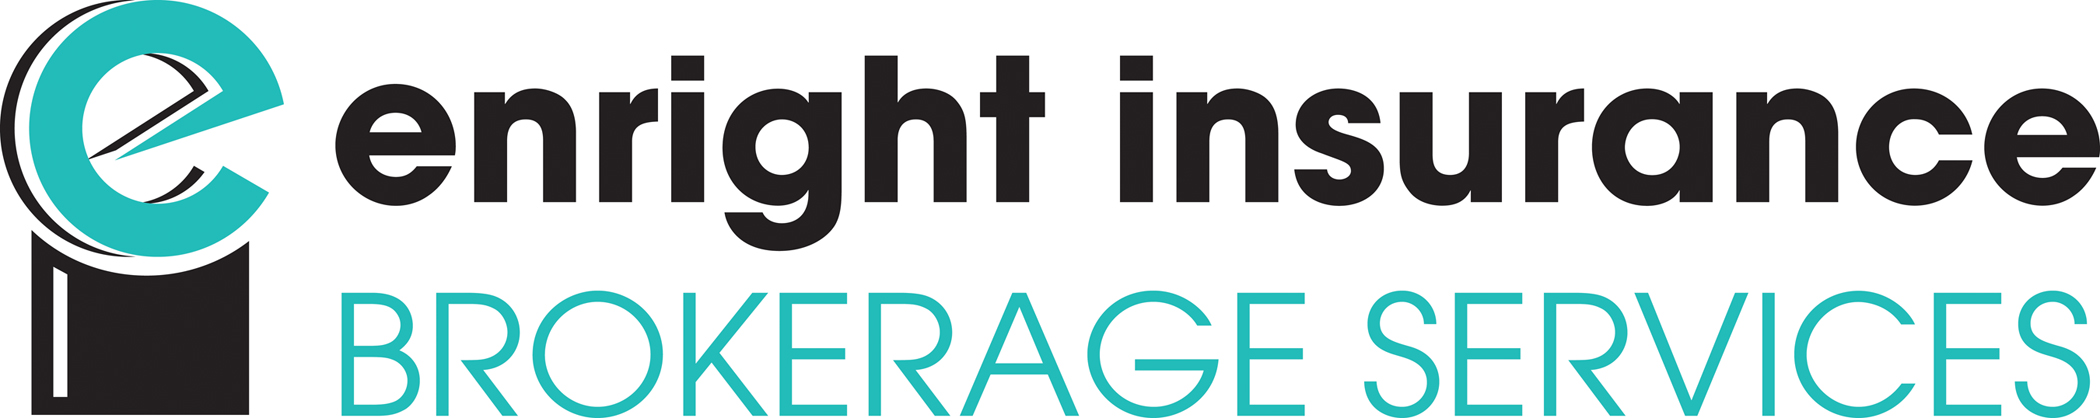 Enright Insurance